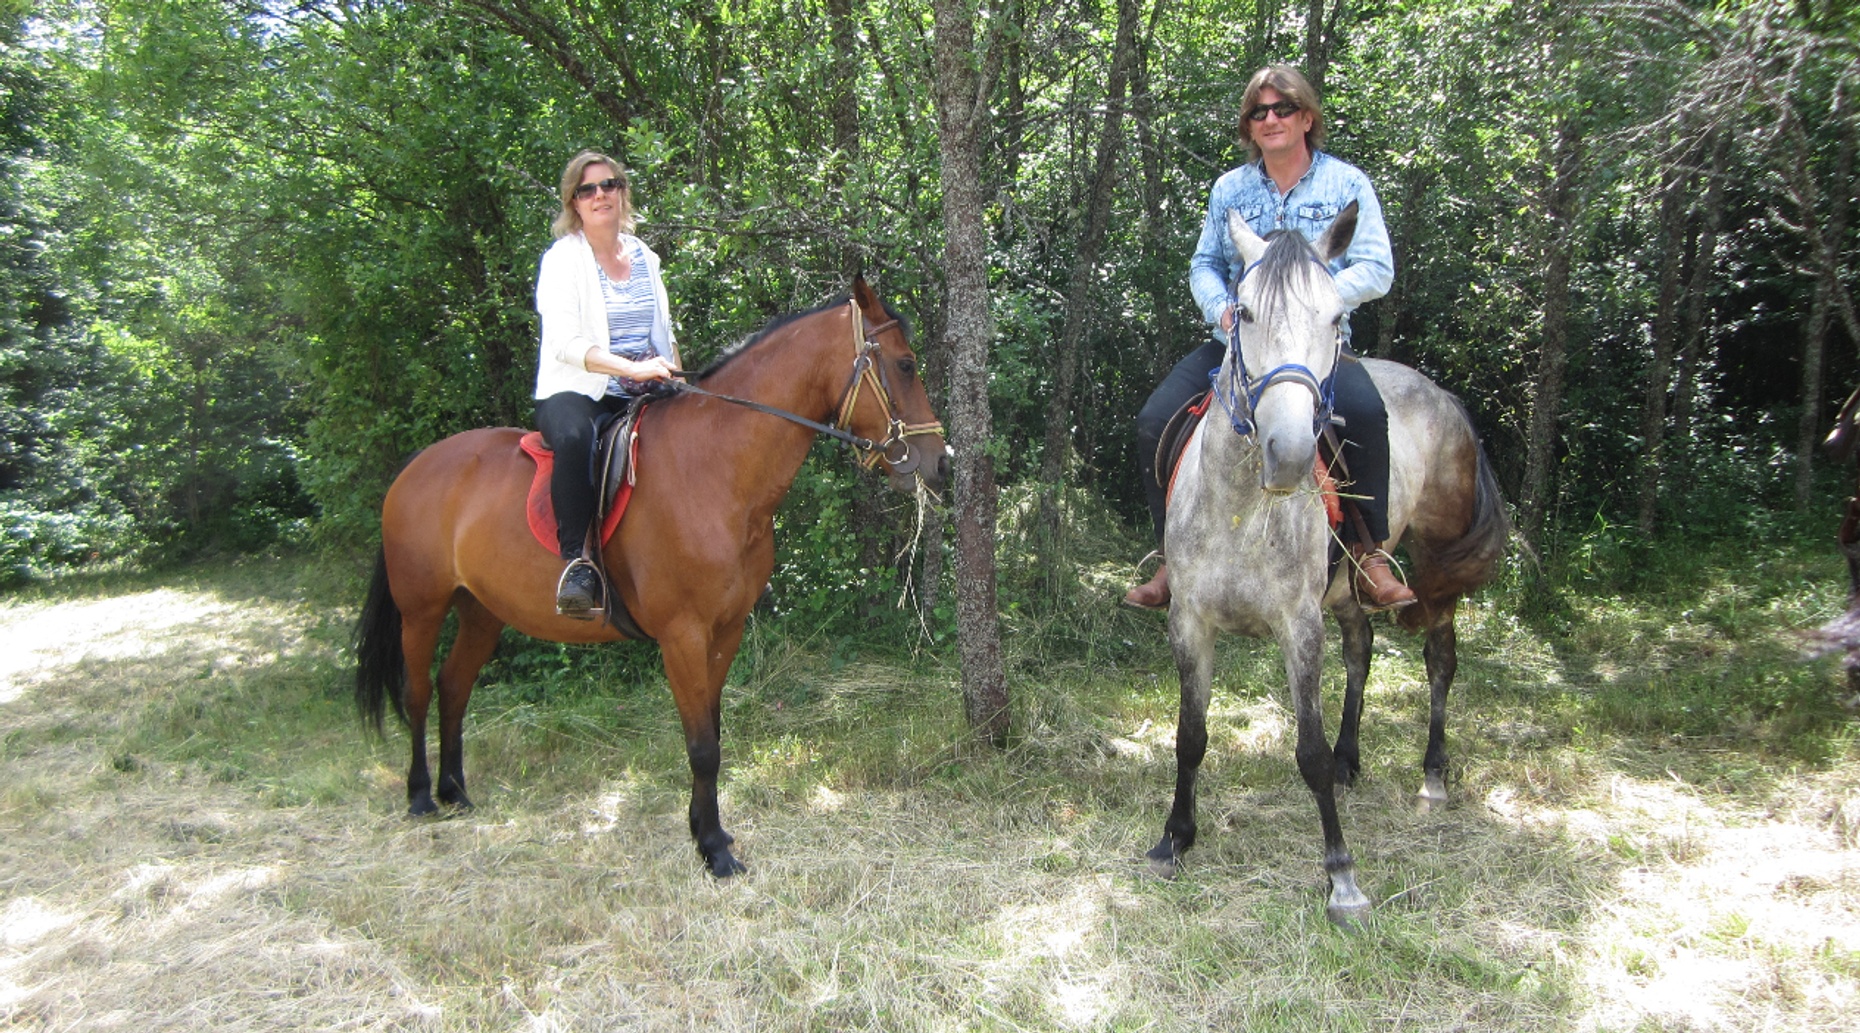 One-Hour Virgin River Horseback Ride in Zion National Park